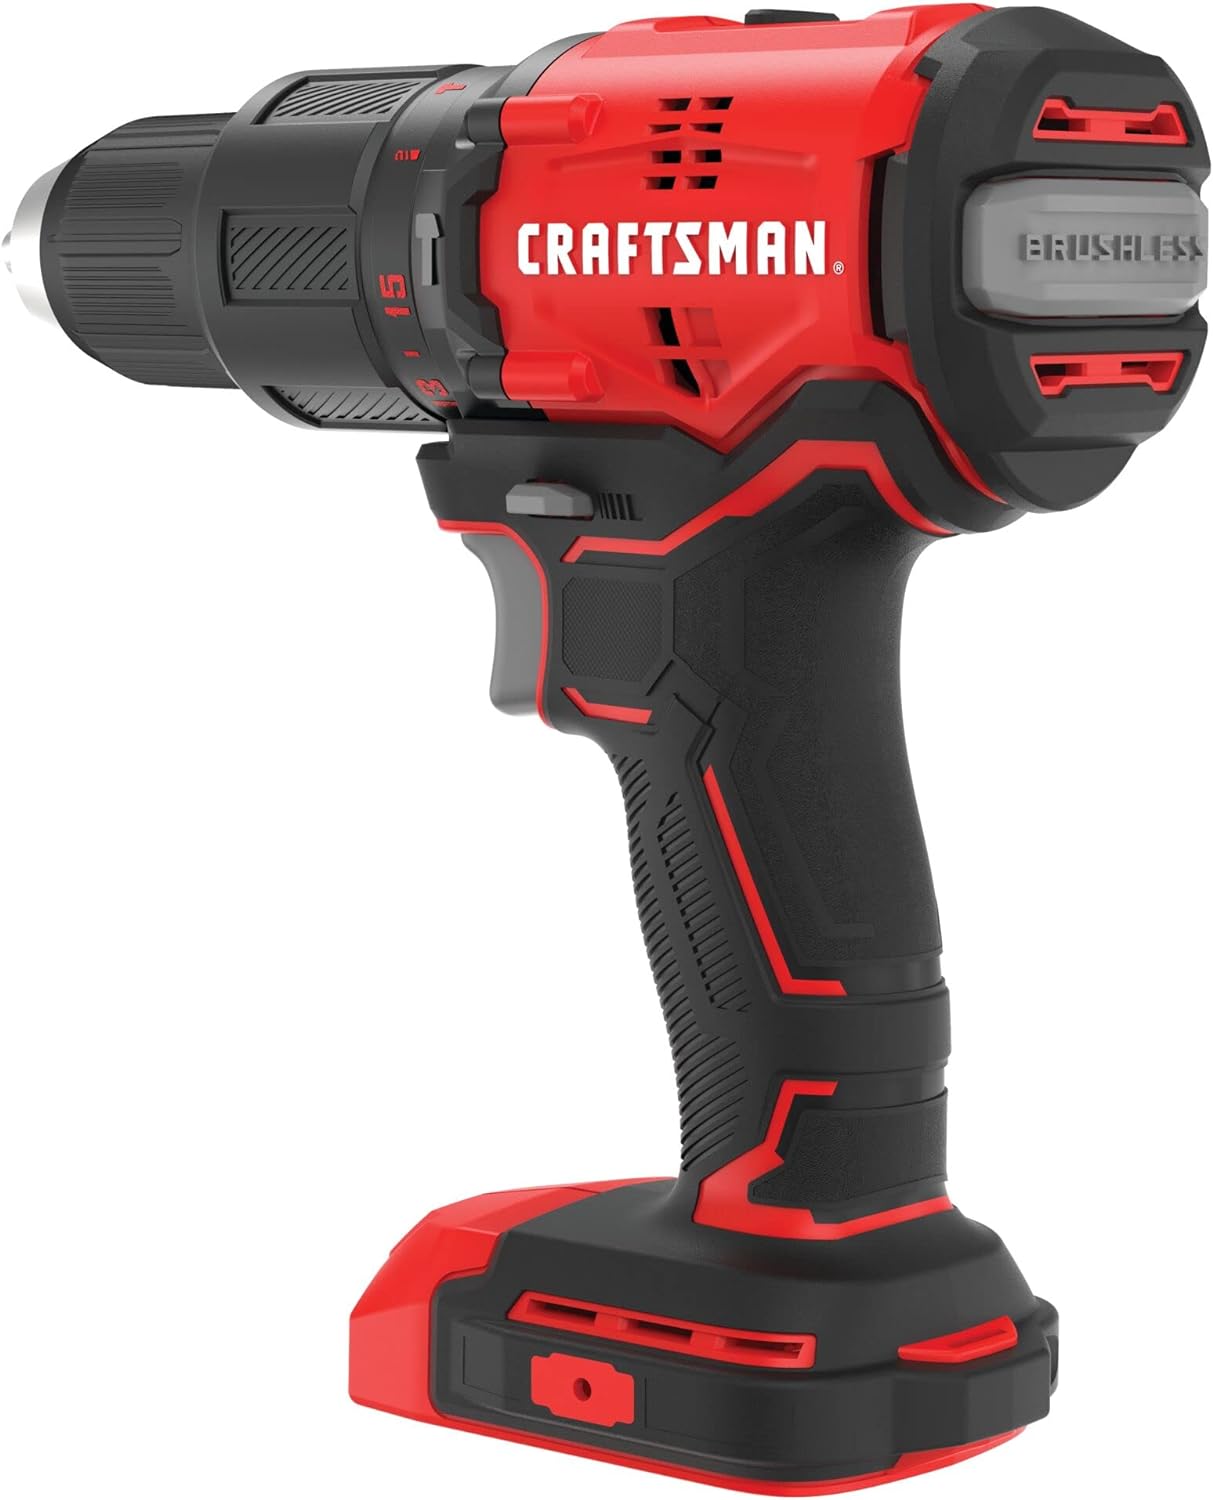 CRAFTSMAN 20V Cordless Hammer Drill, Brushless, Variable Speed, Tool Only (CMCD731B)